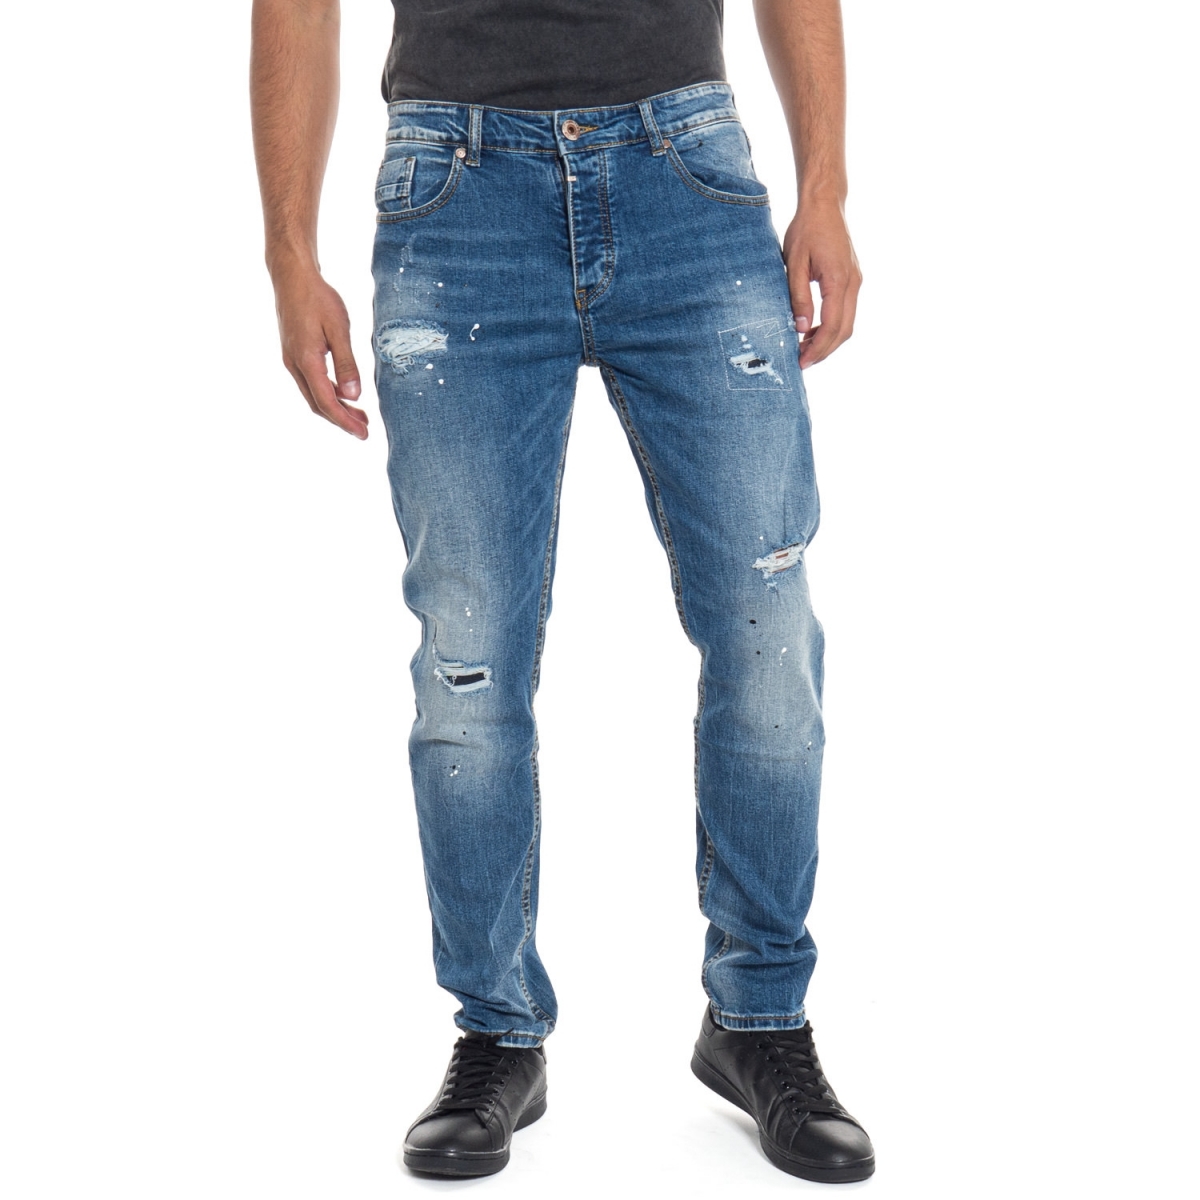 Kleidung Jeans mann Jeans LPY1772 LANDEK PARK Cafedelmar Shop